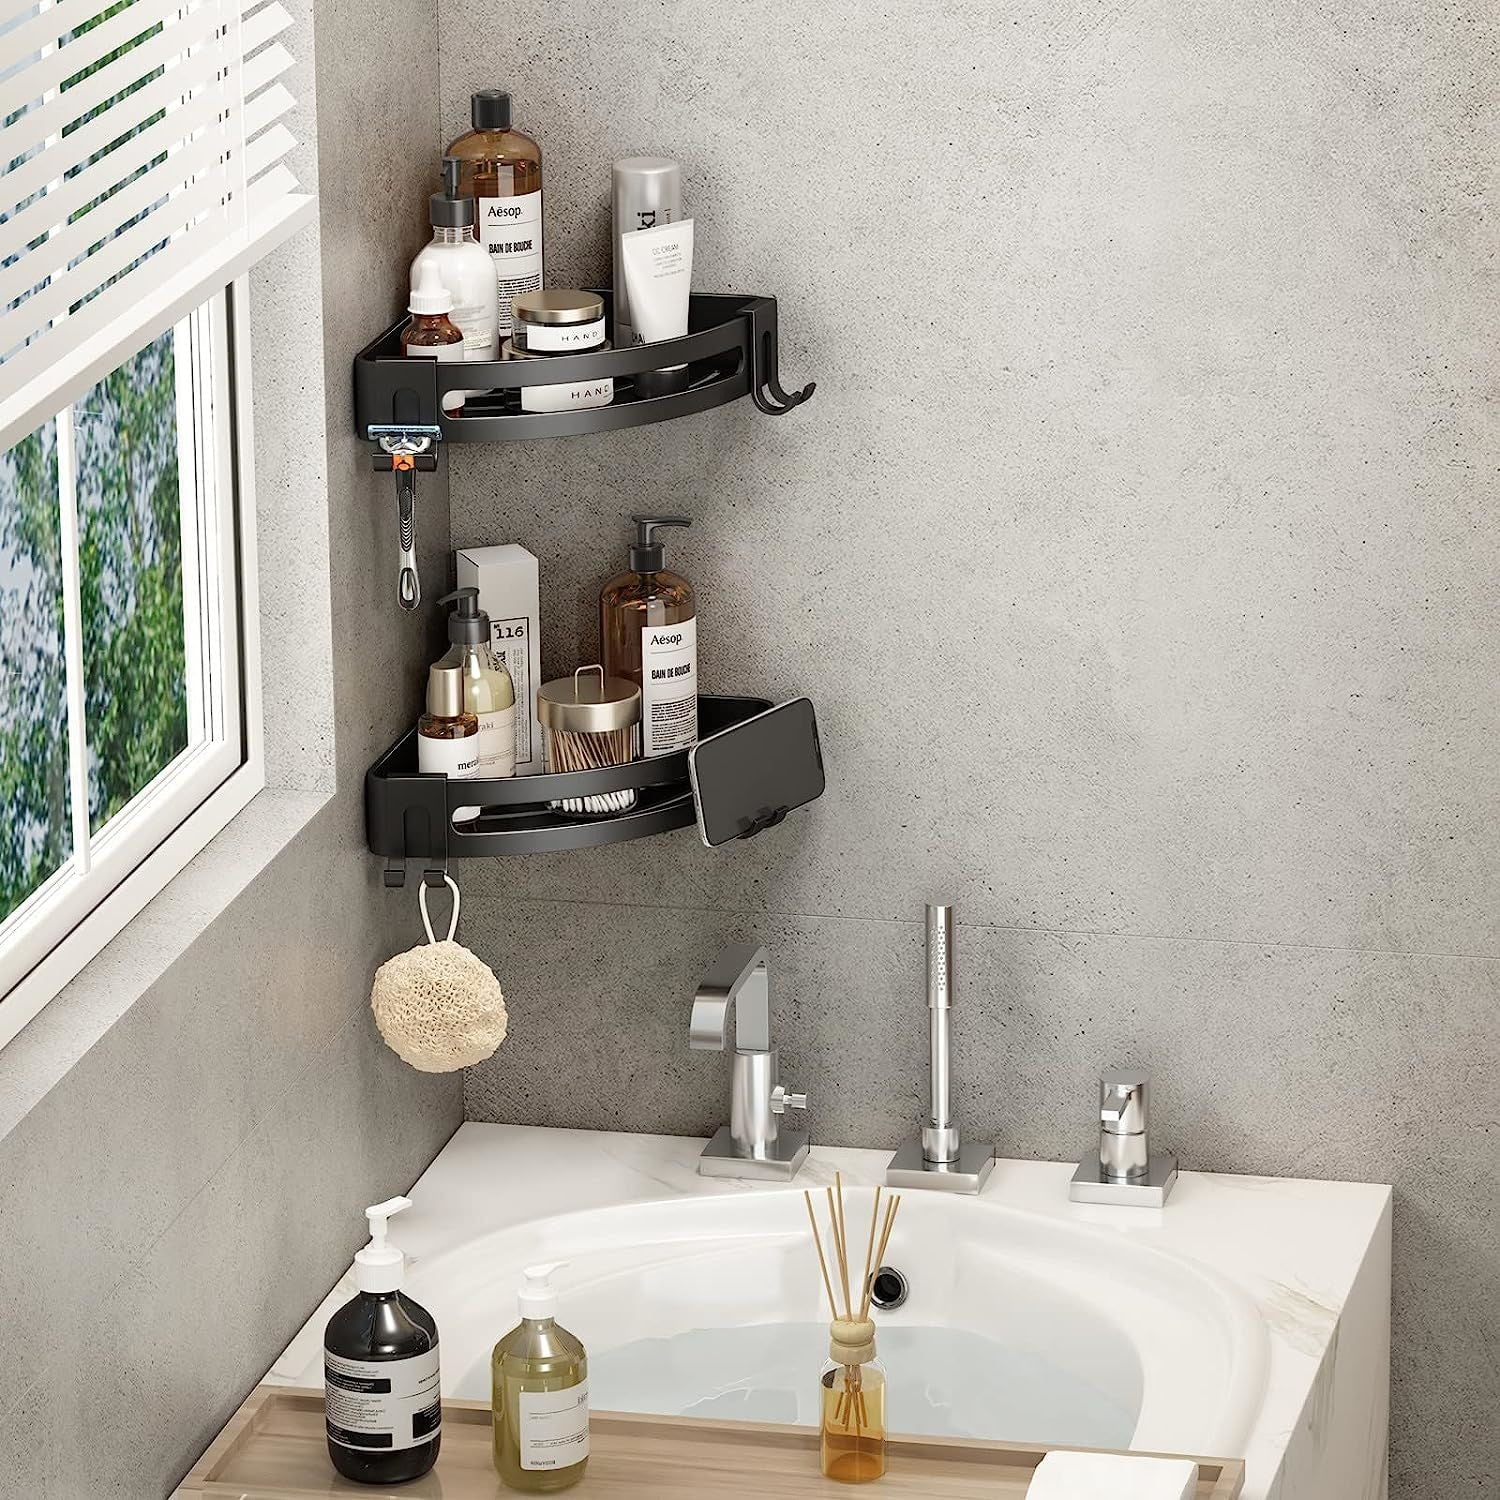  Lovelers Shower Shelves for Inside Shower 2 Pack - Rustproof  Bathroom Corner Shelf for Bath Accessories Storage - Silver Shampoo Holder  for Shower Wall - Adhesive Shower Corner Caddy & Bath